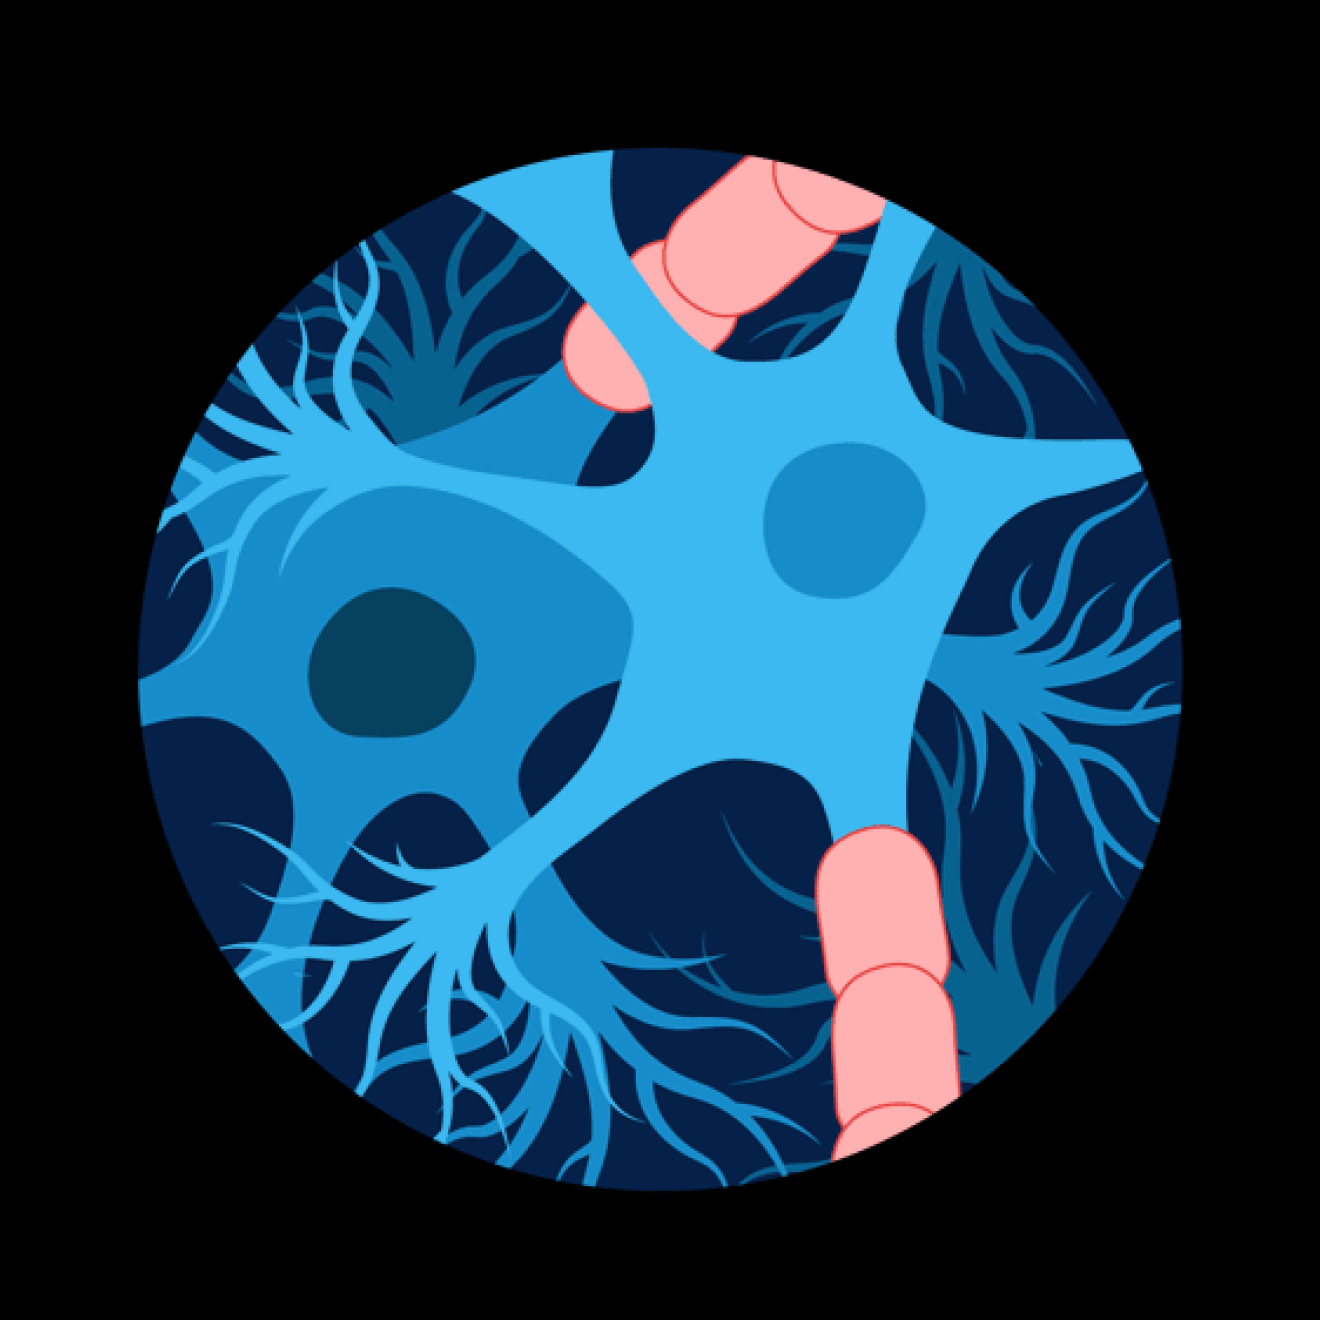 An illustration of the brain's neurons as seen through a peephole